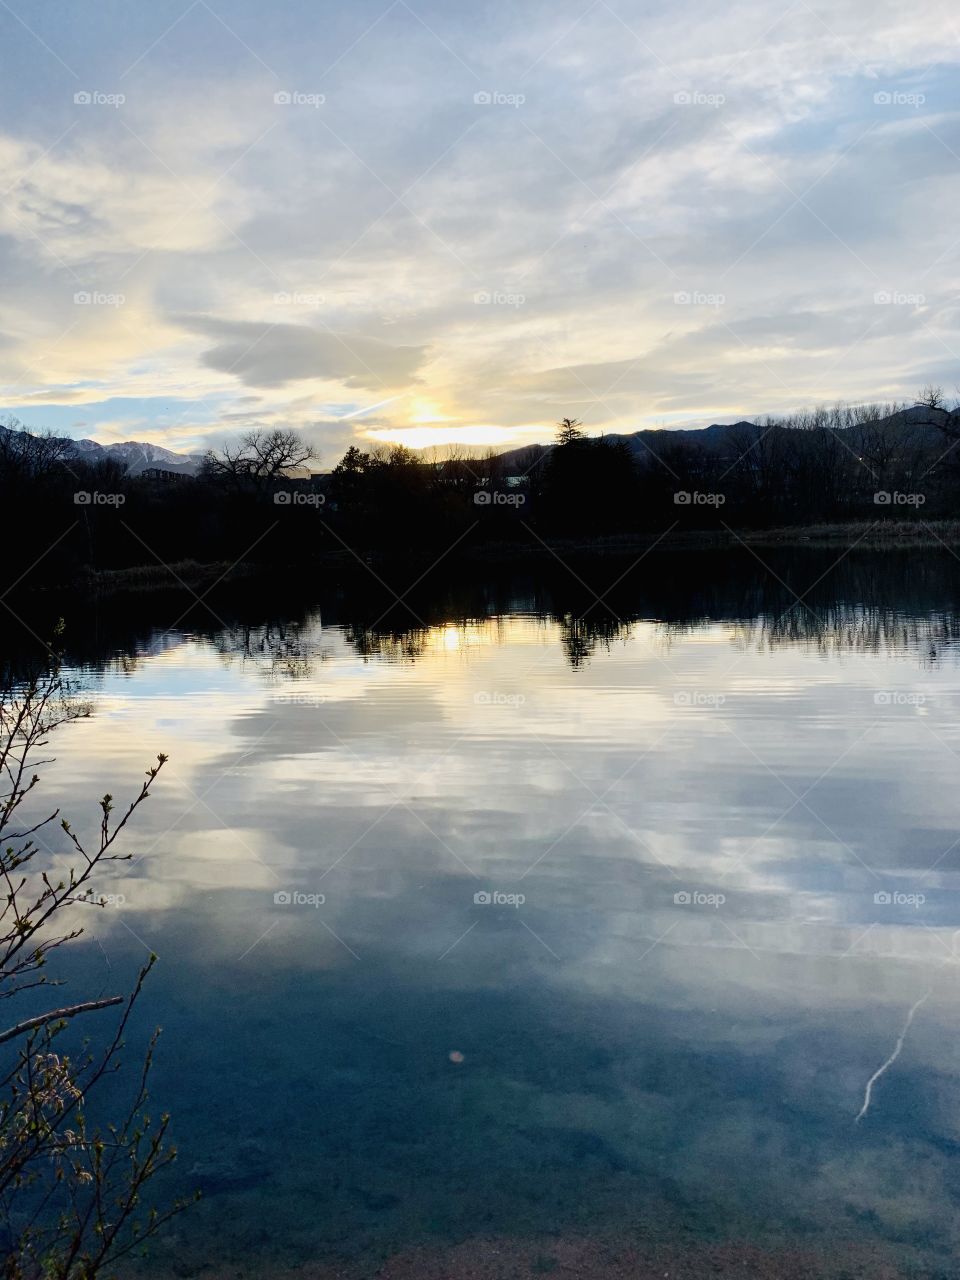 Lake, Water, Reflection, Landscape, Nature